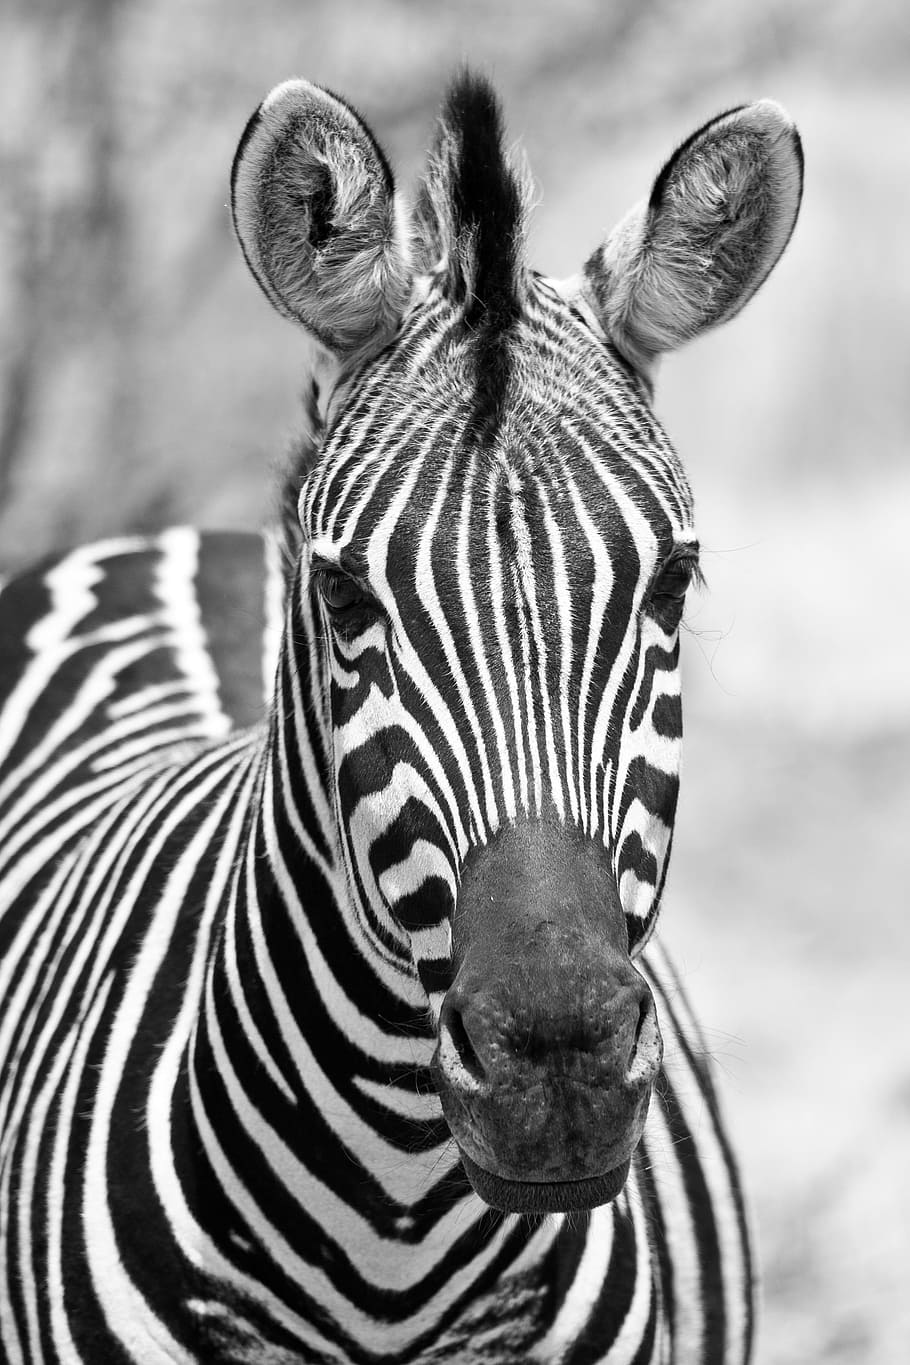 foto grayscale, zebra, satu warna, hitam putih, taman nasional pilanesberg, potret, afrika selatan, vertikal, margasatwa, hewan margasatwa